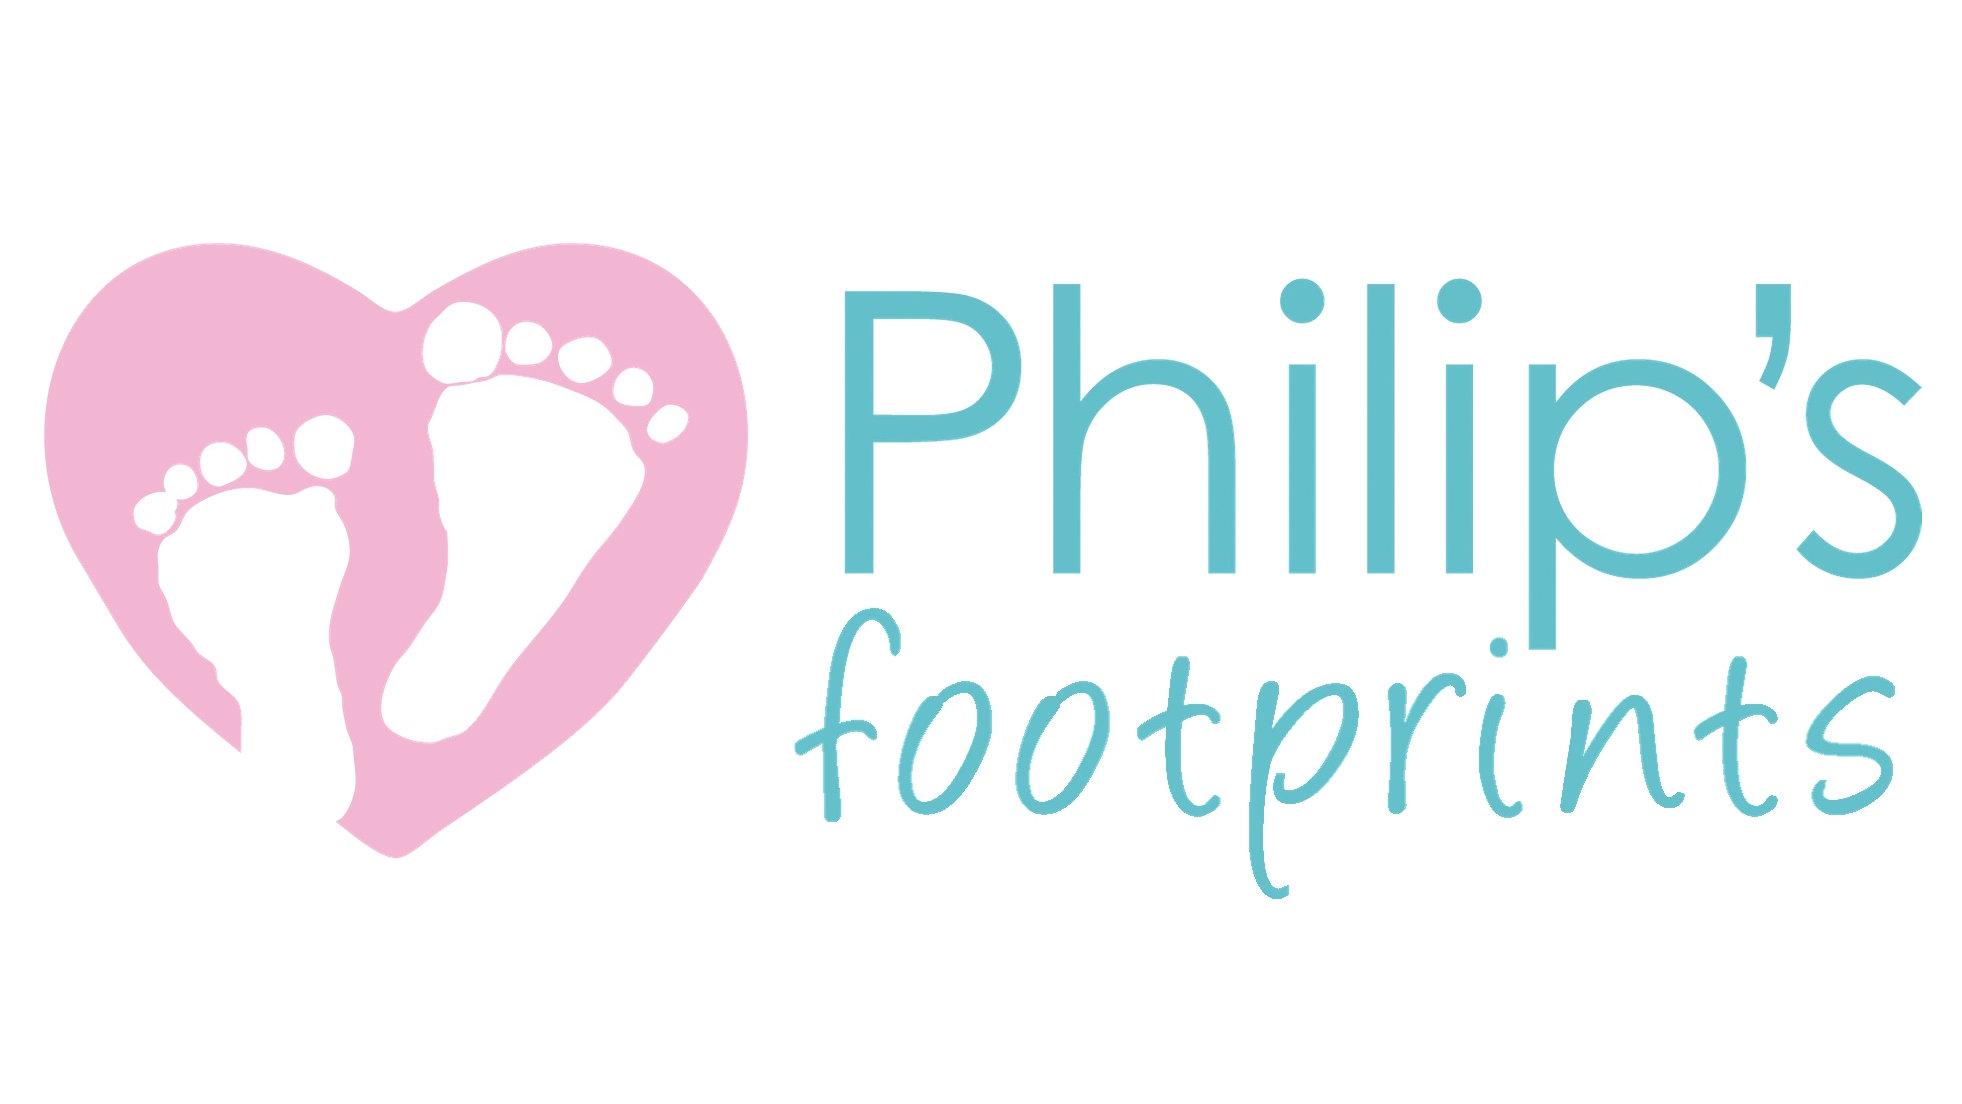 Philips Footprints